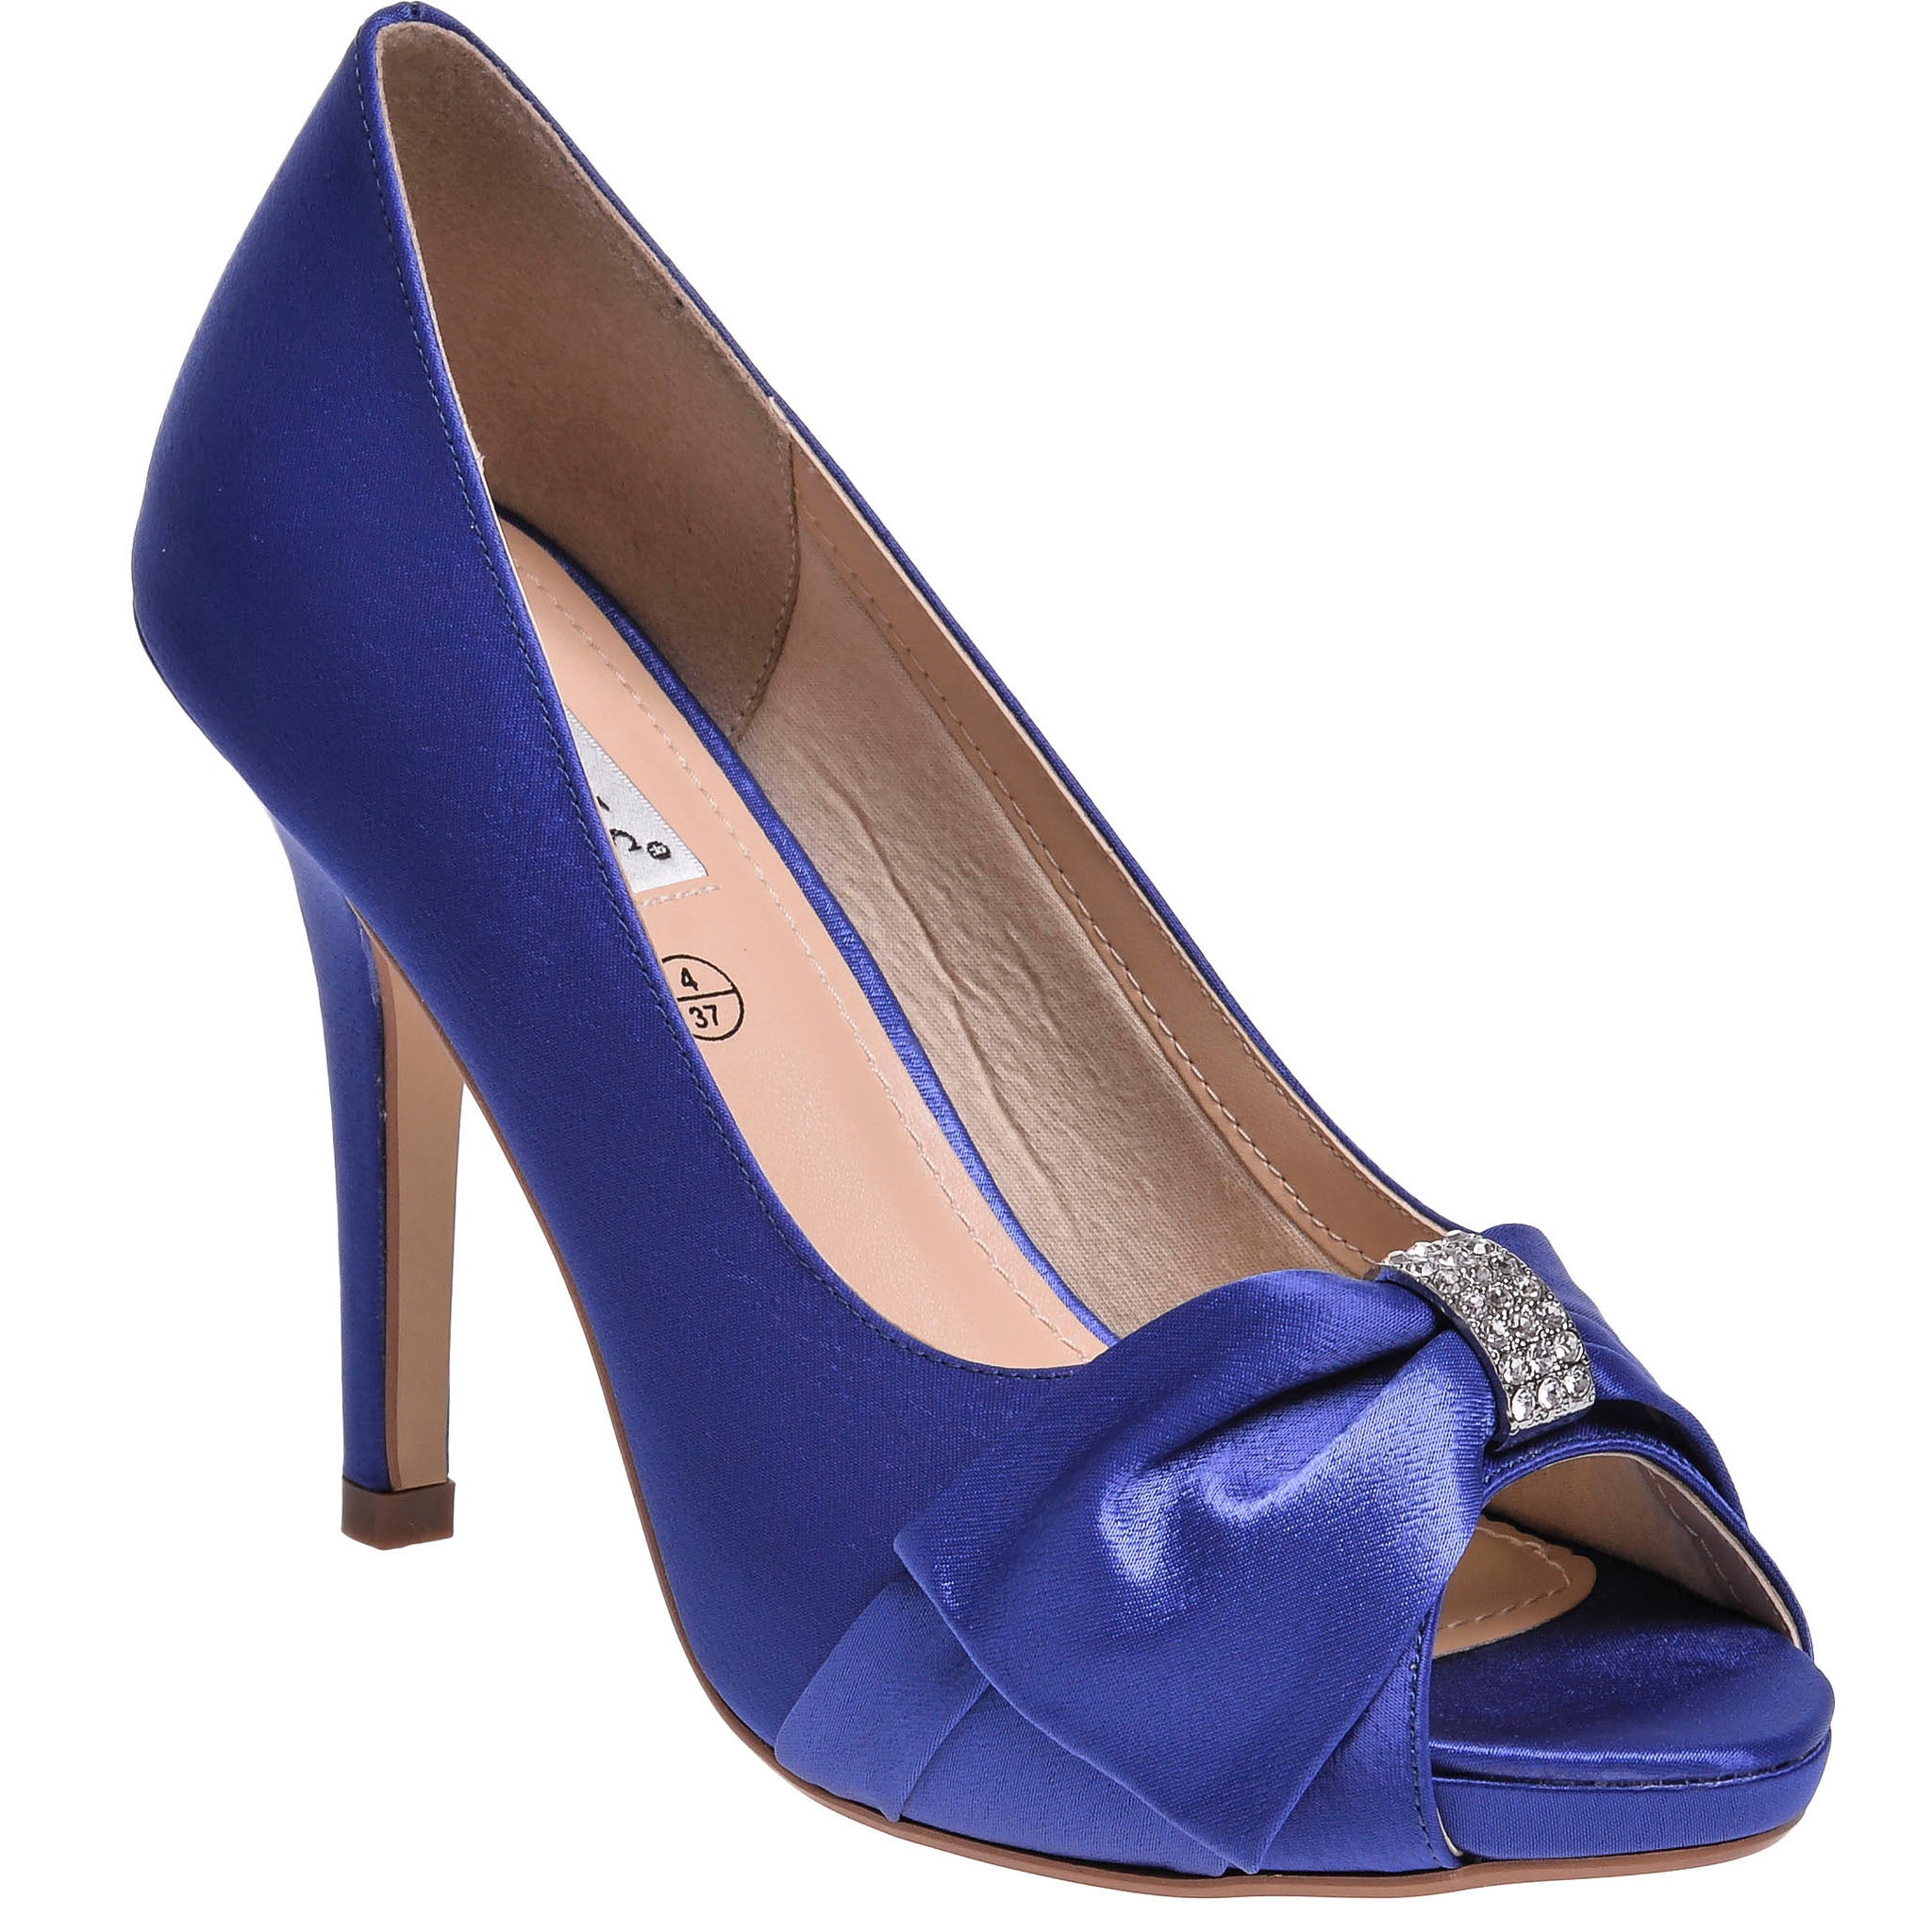 Sugar | Shoes | Sugar Cobalt Blue Floating Heels | Poshmark